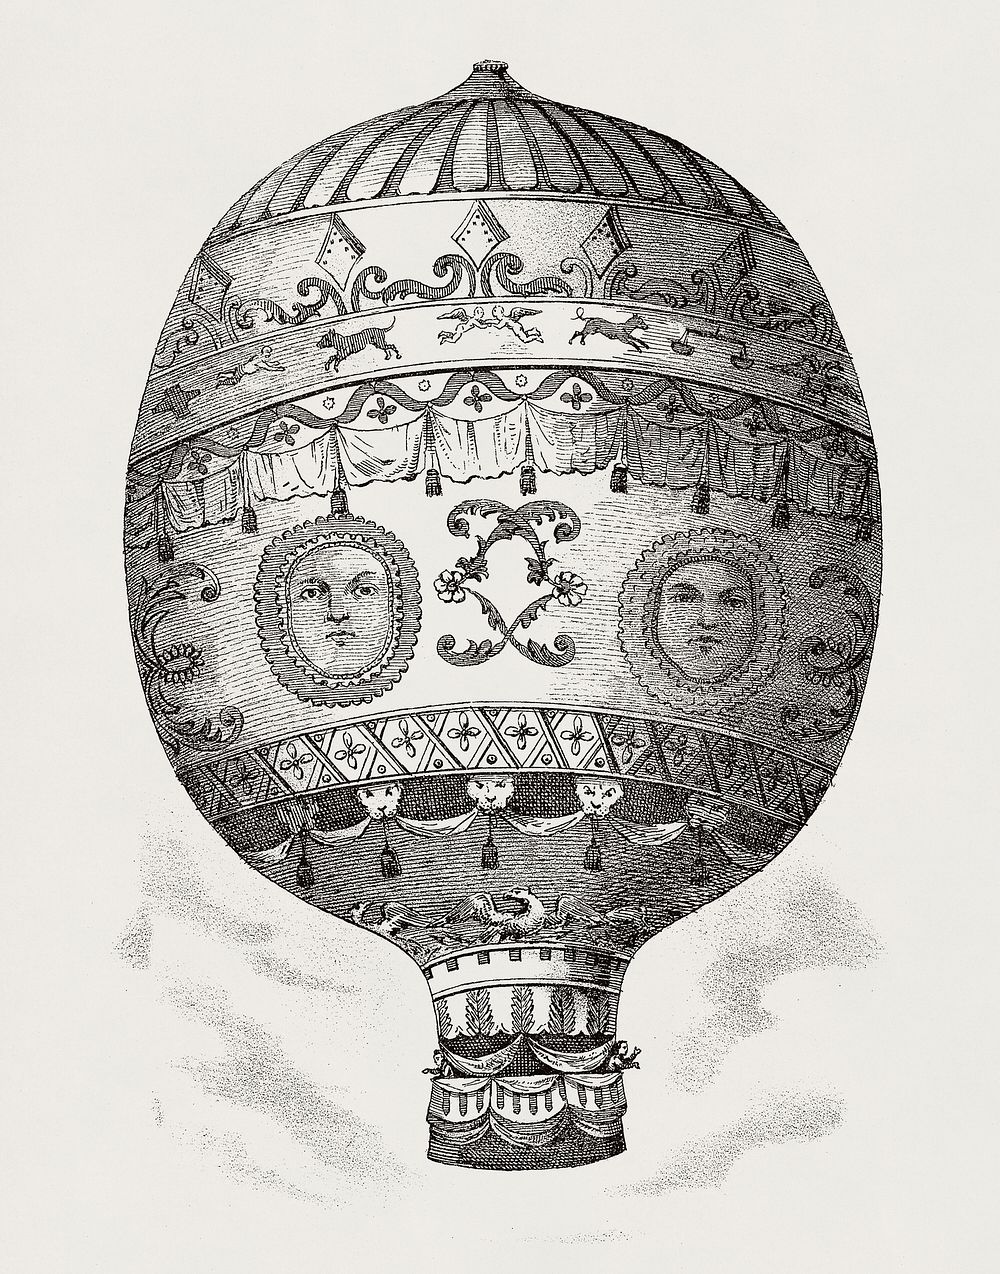 Vintage illustration of Montgolfier's balloon